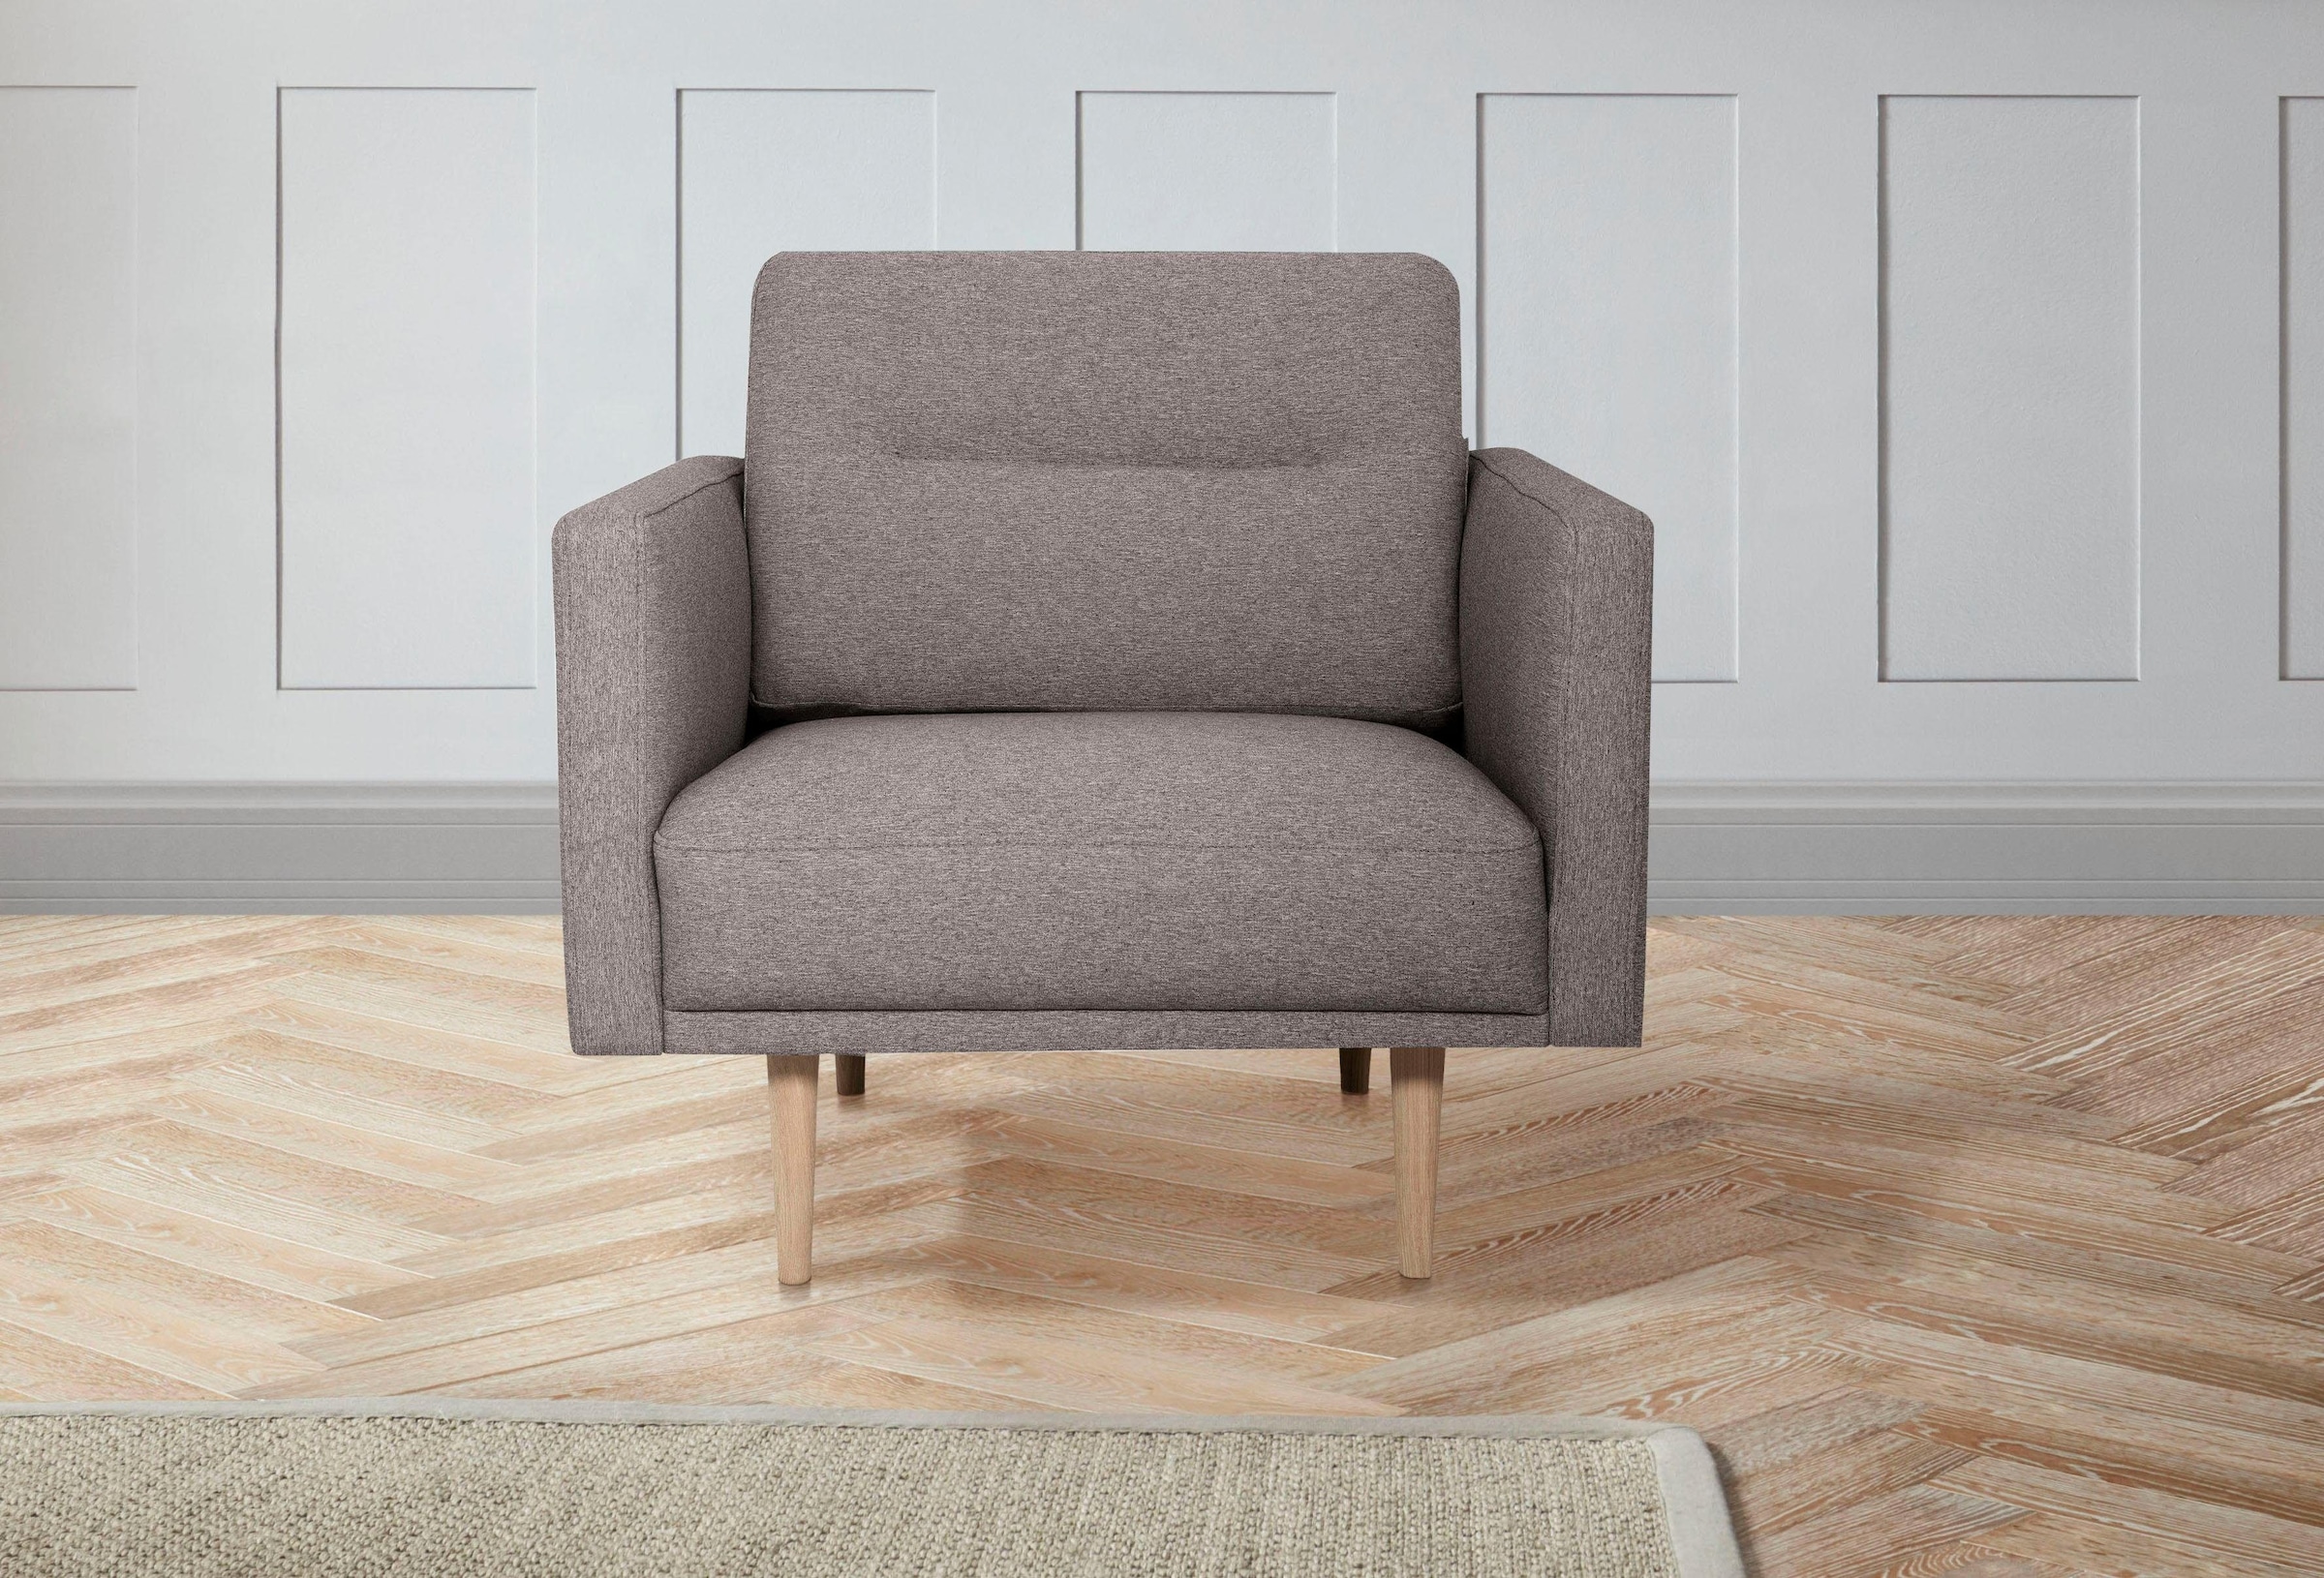 andas Sessel »Brande«, in skandinavischem Design, verschiedene Farben verfügbar